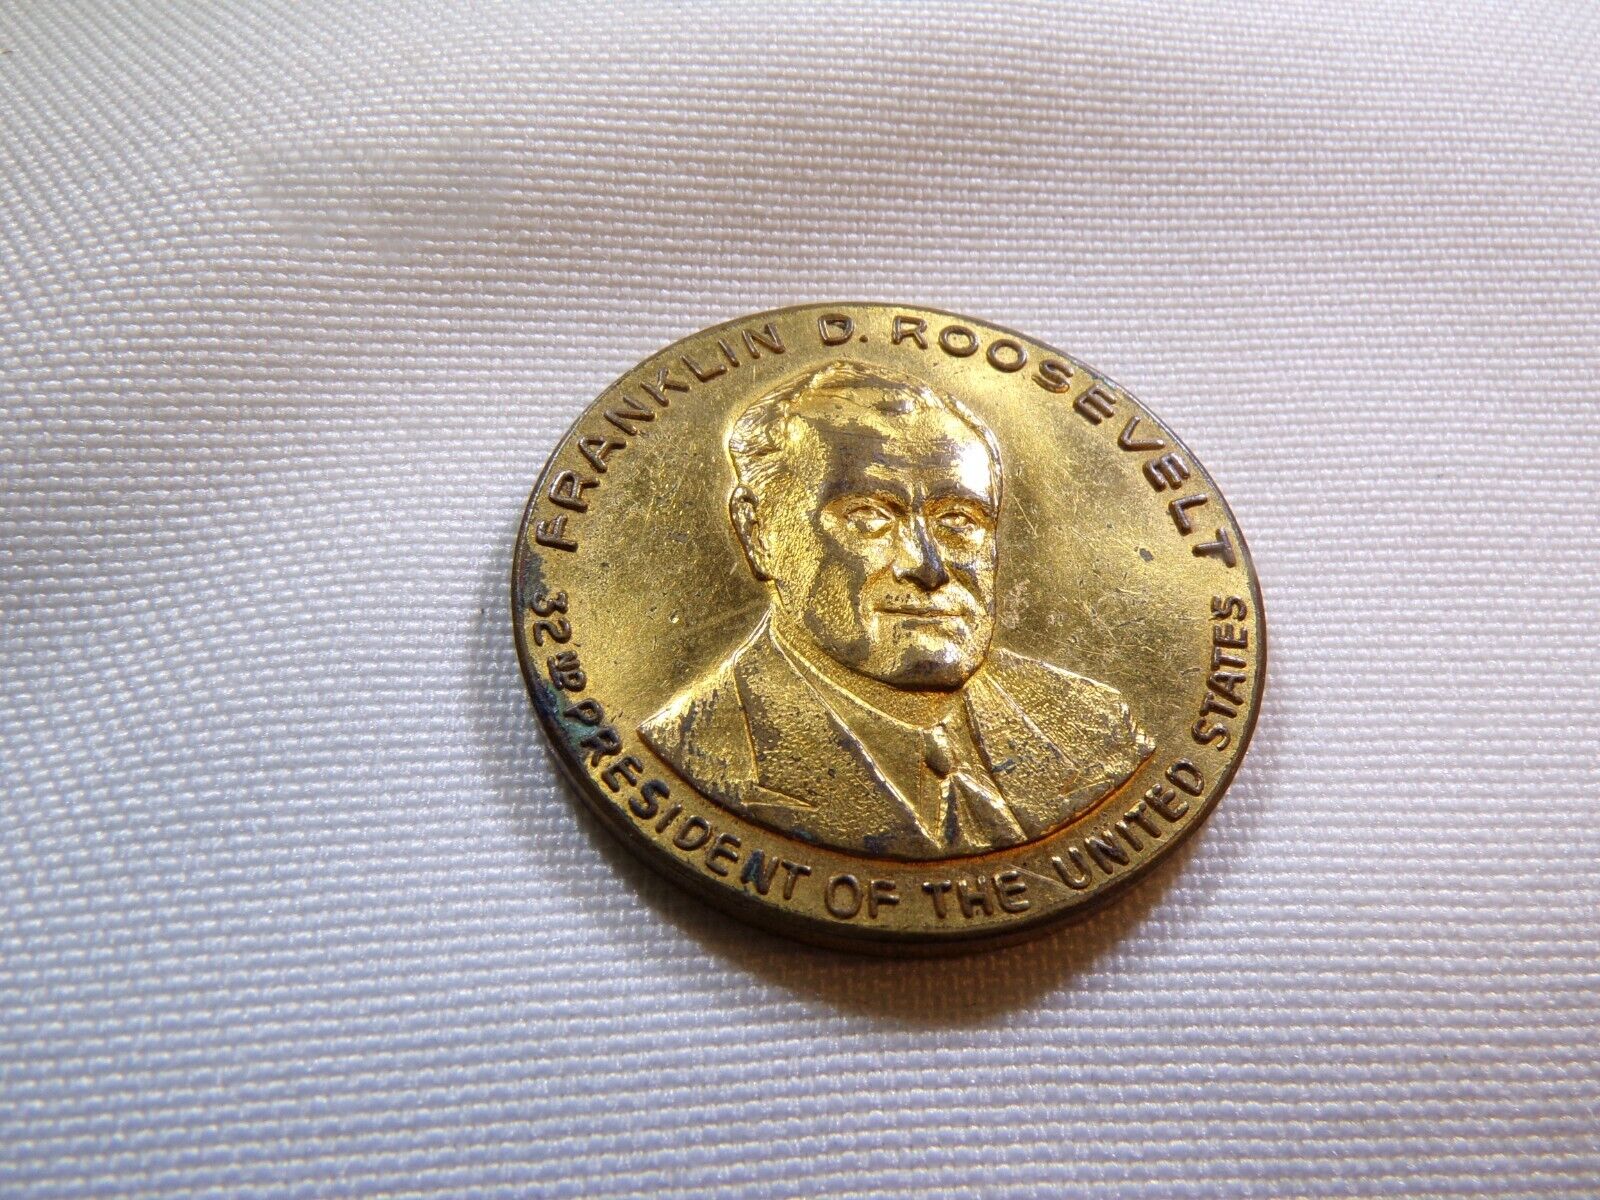 RARE FDR US President 1933-1945 Capital Commemorative Coin (3362)